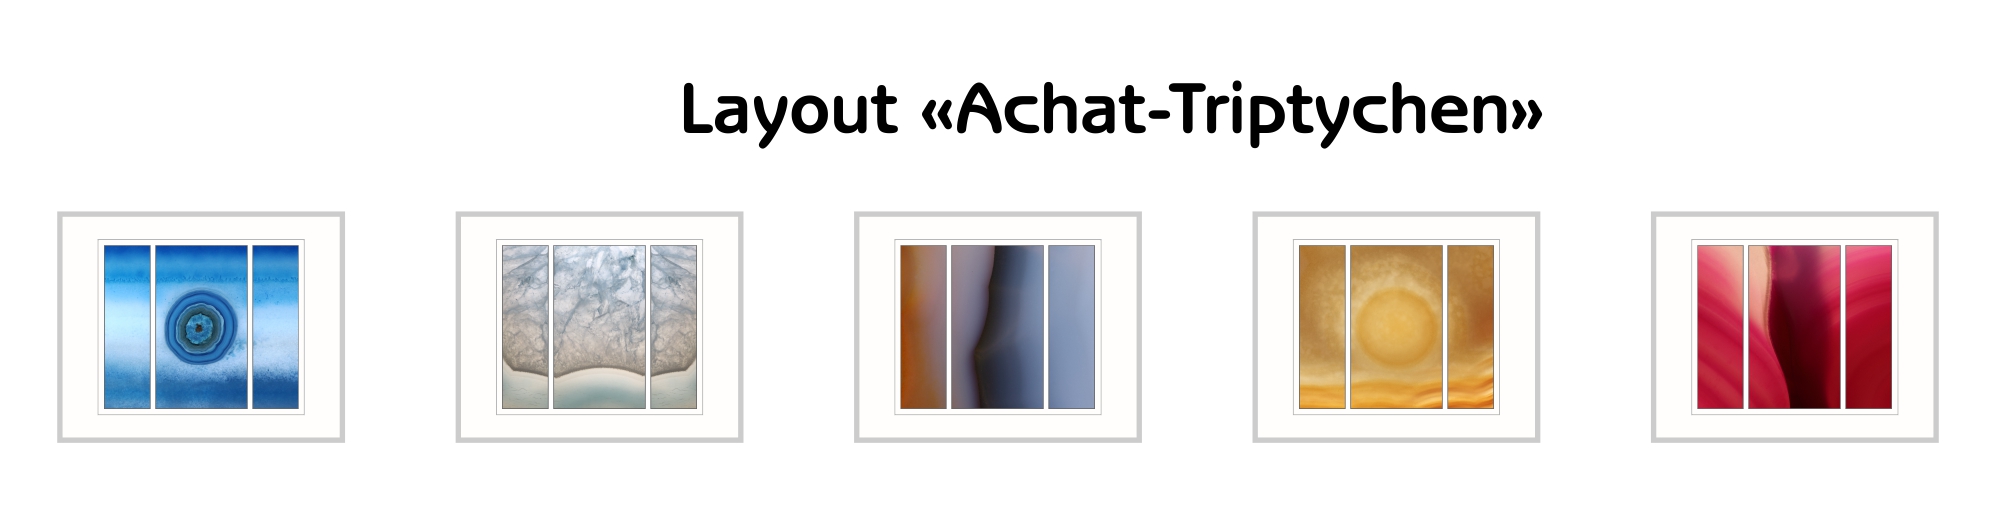 image-12141194-Achat-Triptychen-aab32.jpg